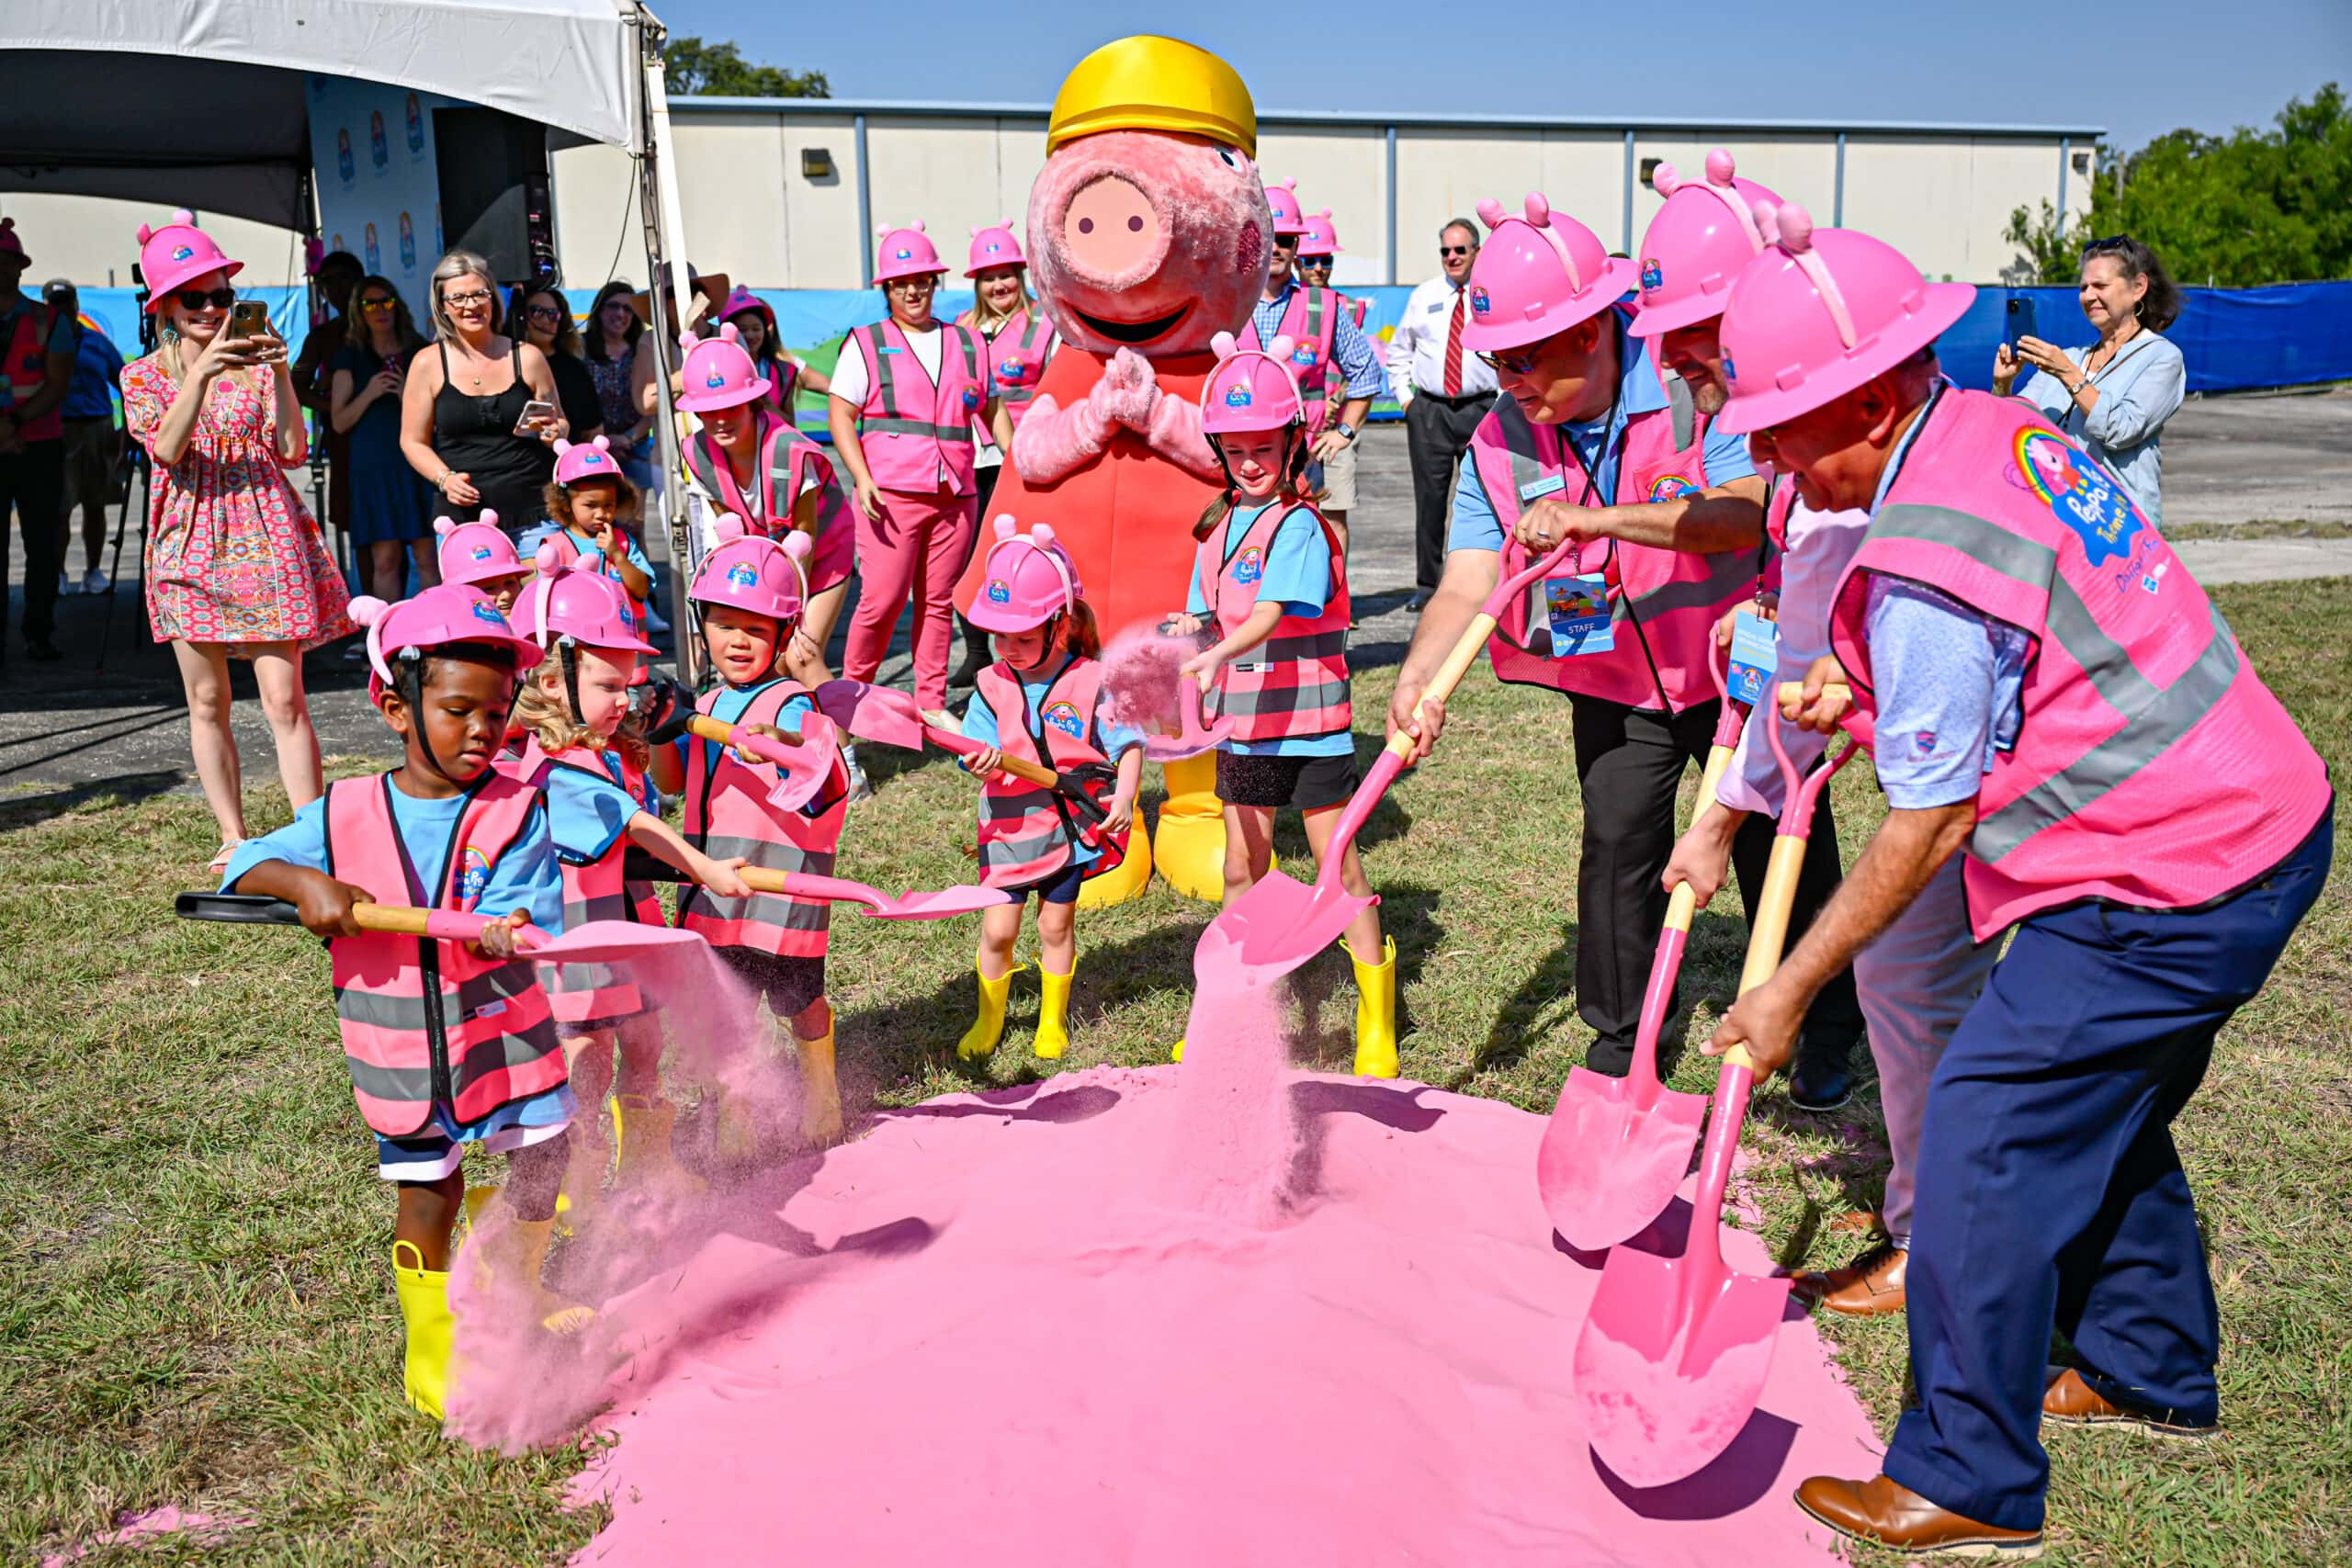 kids shovel pink sand with Peppa Pig